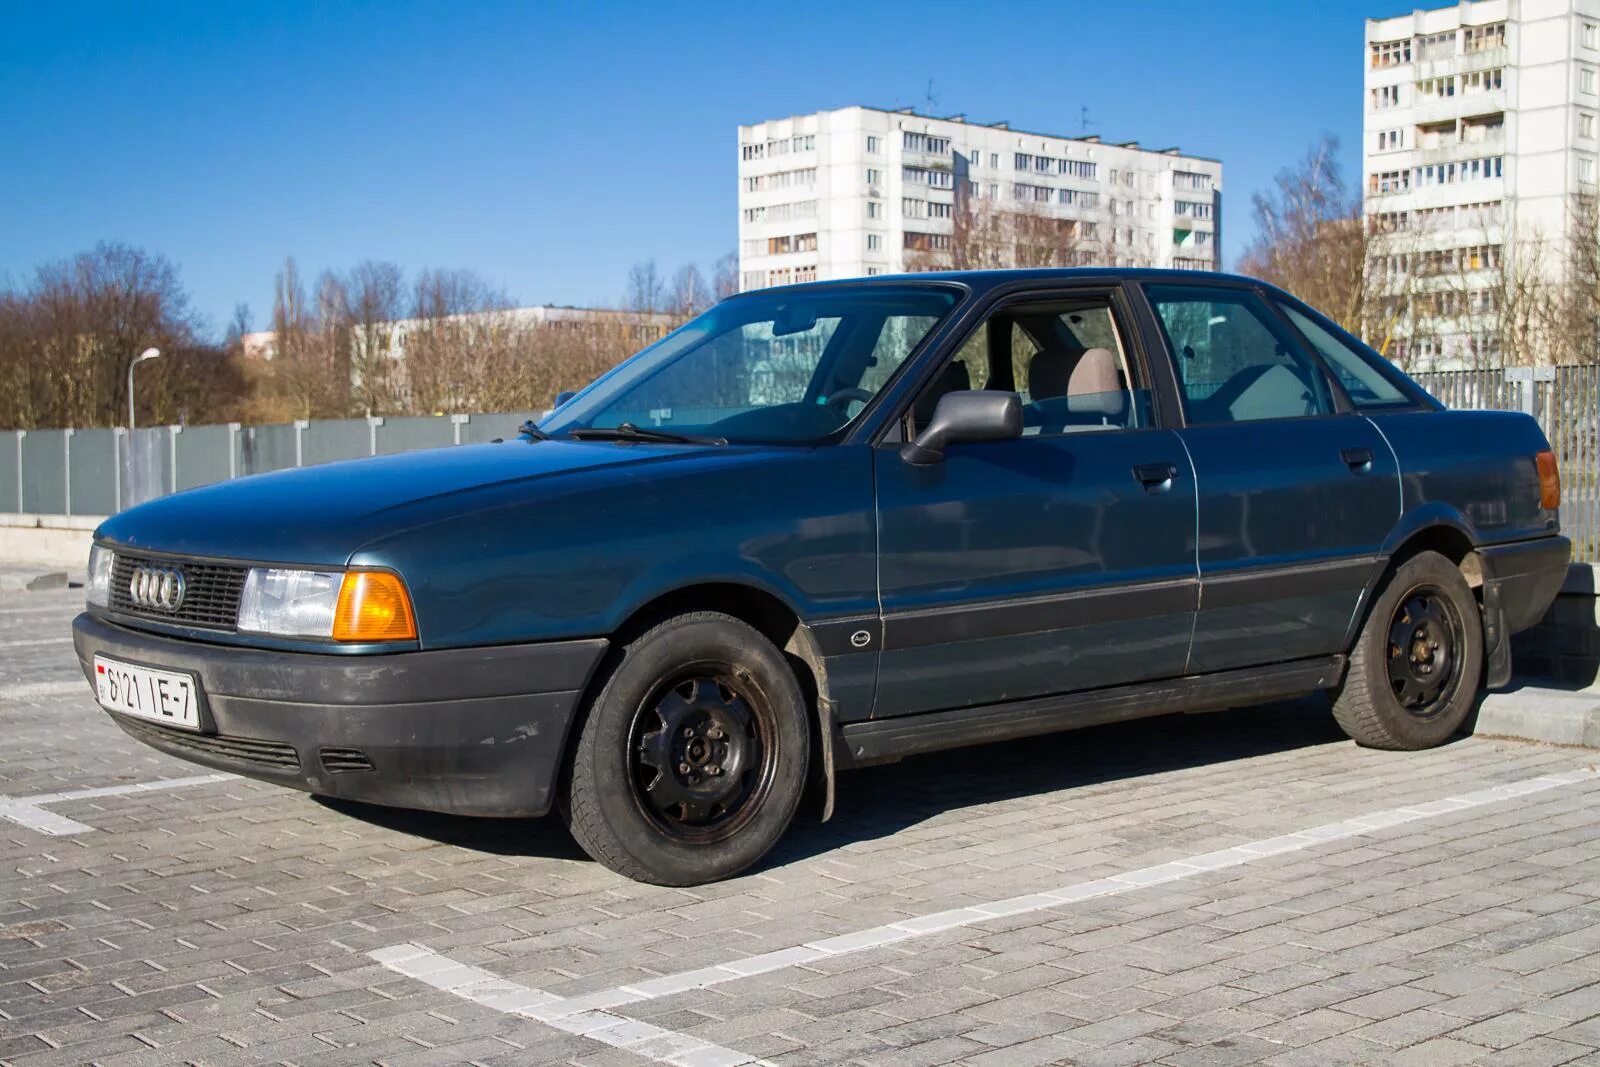 Купить ауди 80 в белоруссии. Ауди 80 б3 голубая. Ауди 80 б3 синяя. Audi 80 b3 синий голубой. Ауди 80 б2 синяя.